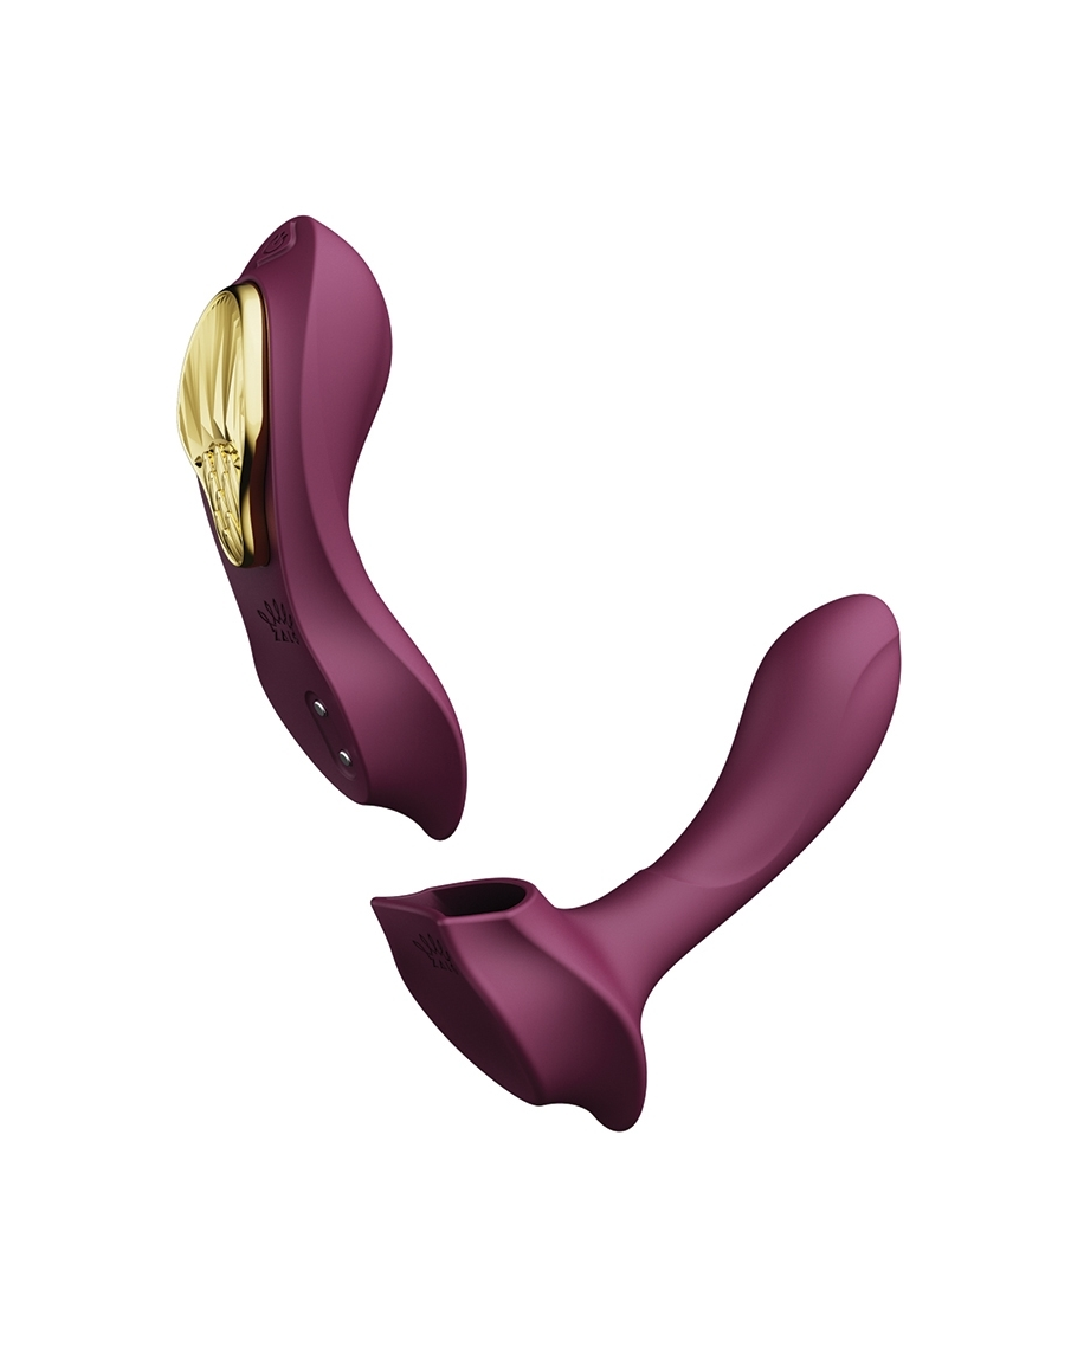 Zalo Aya G-Spot Wearable Panty Vibrator  and magnetic clip 